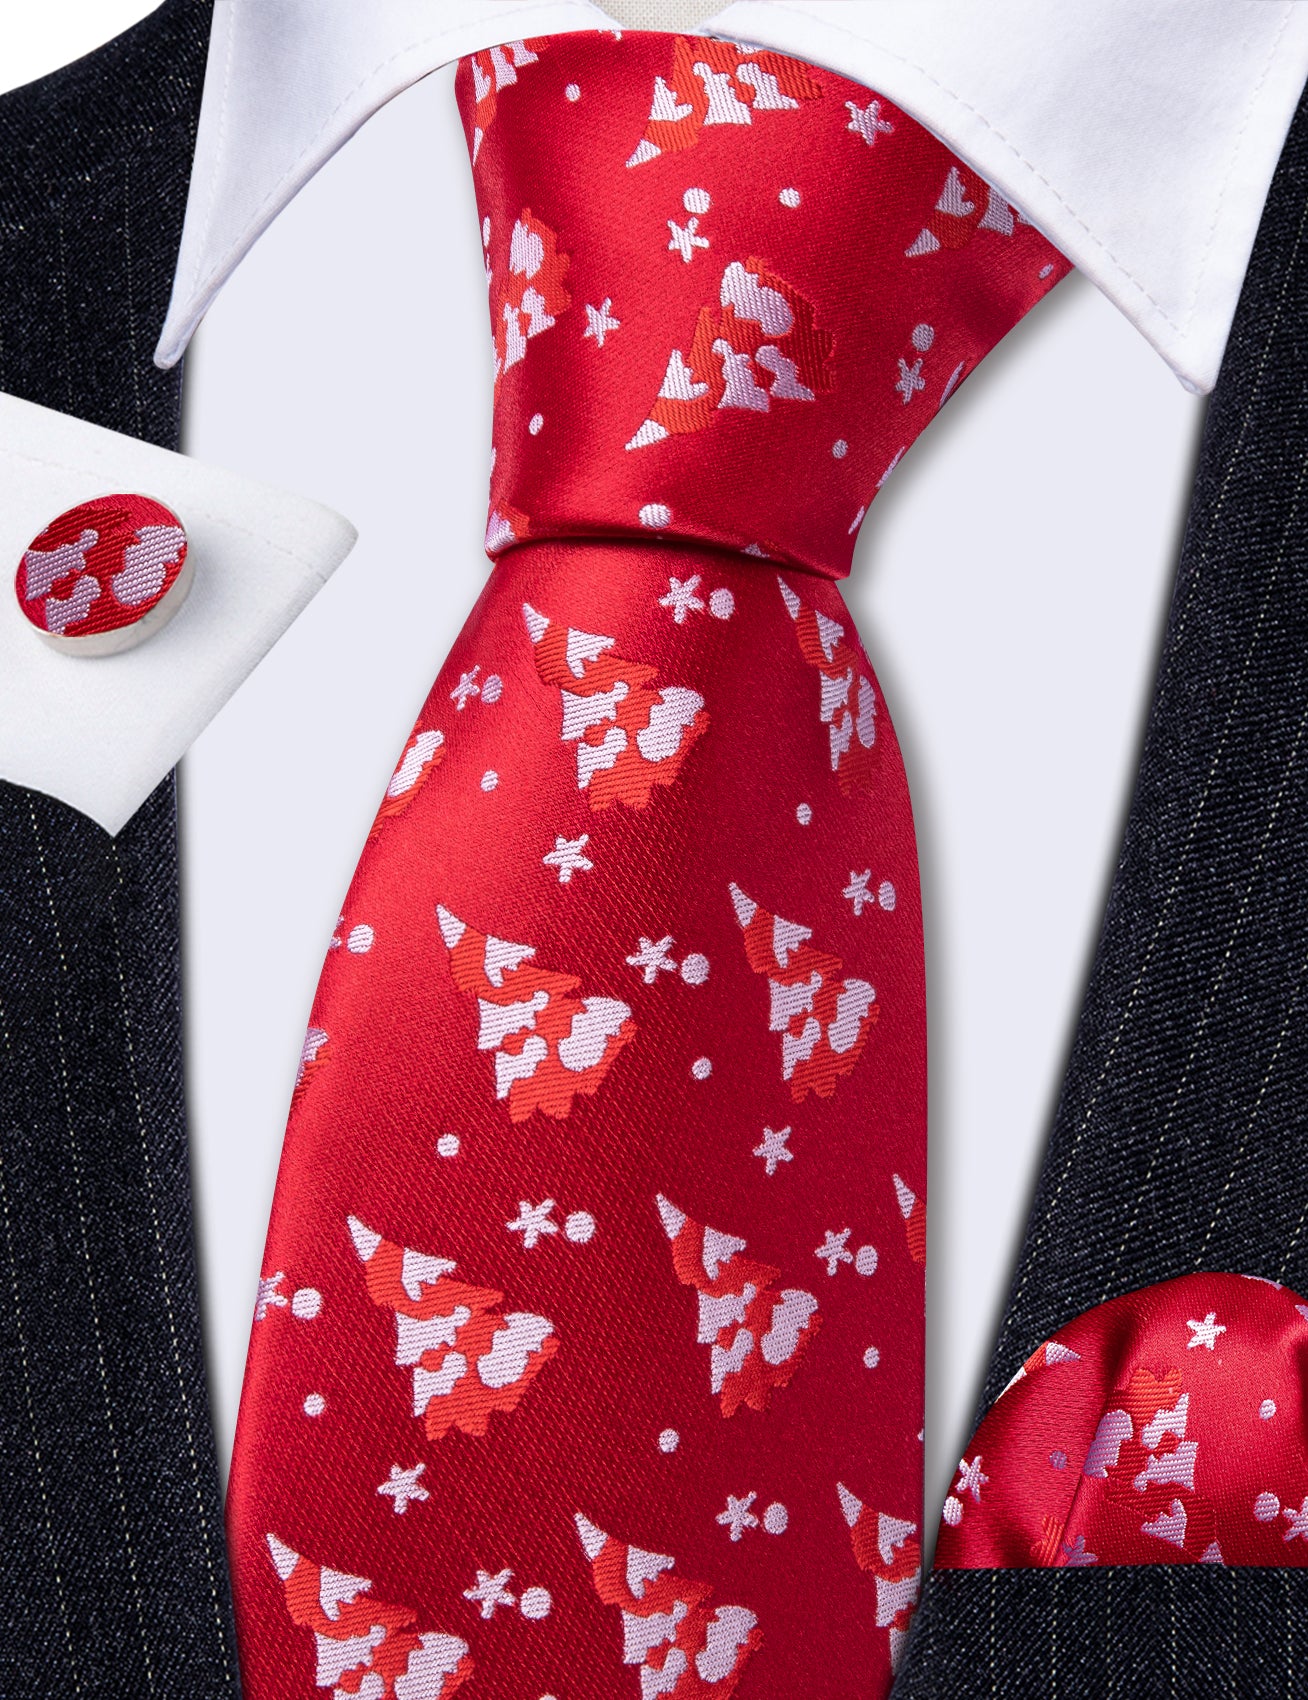 Rew White Christmas Tree Men's Tie Pocket Square Cufflinks Set